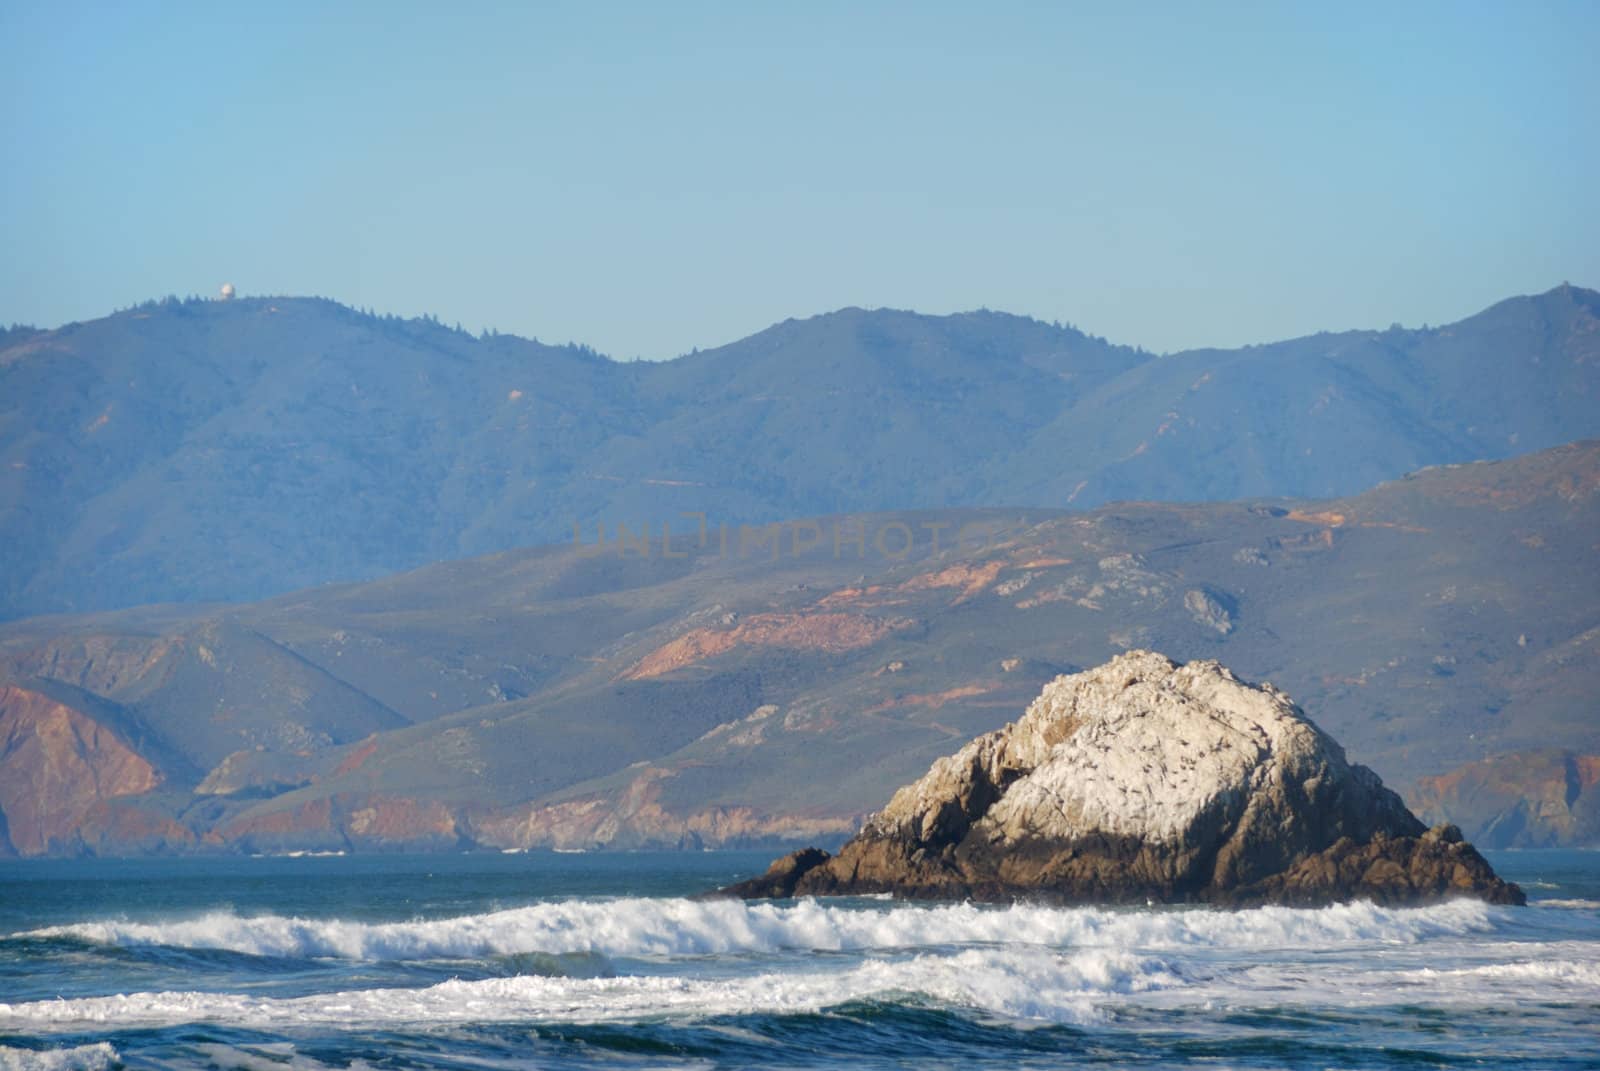 View from Ocean Beach in San Francisco California by goldenangel